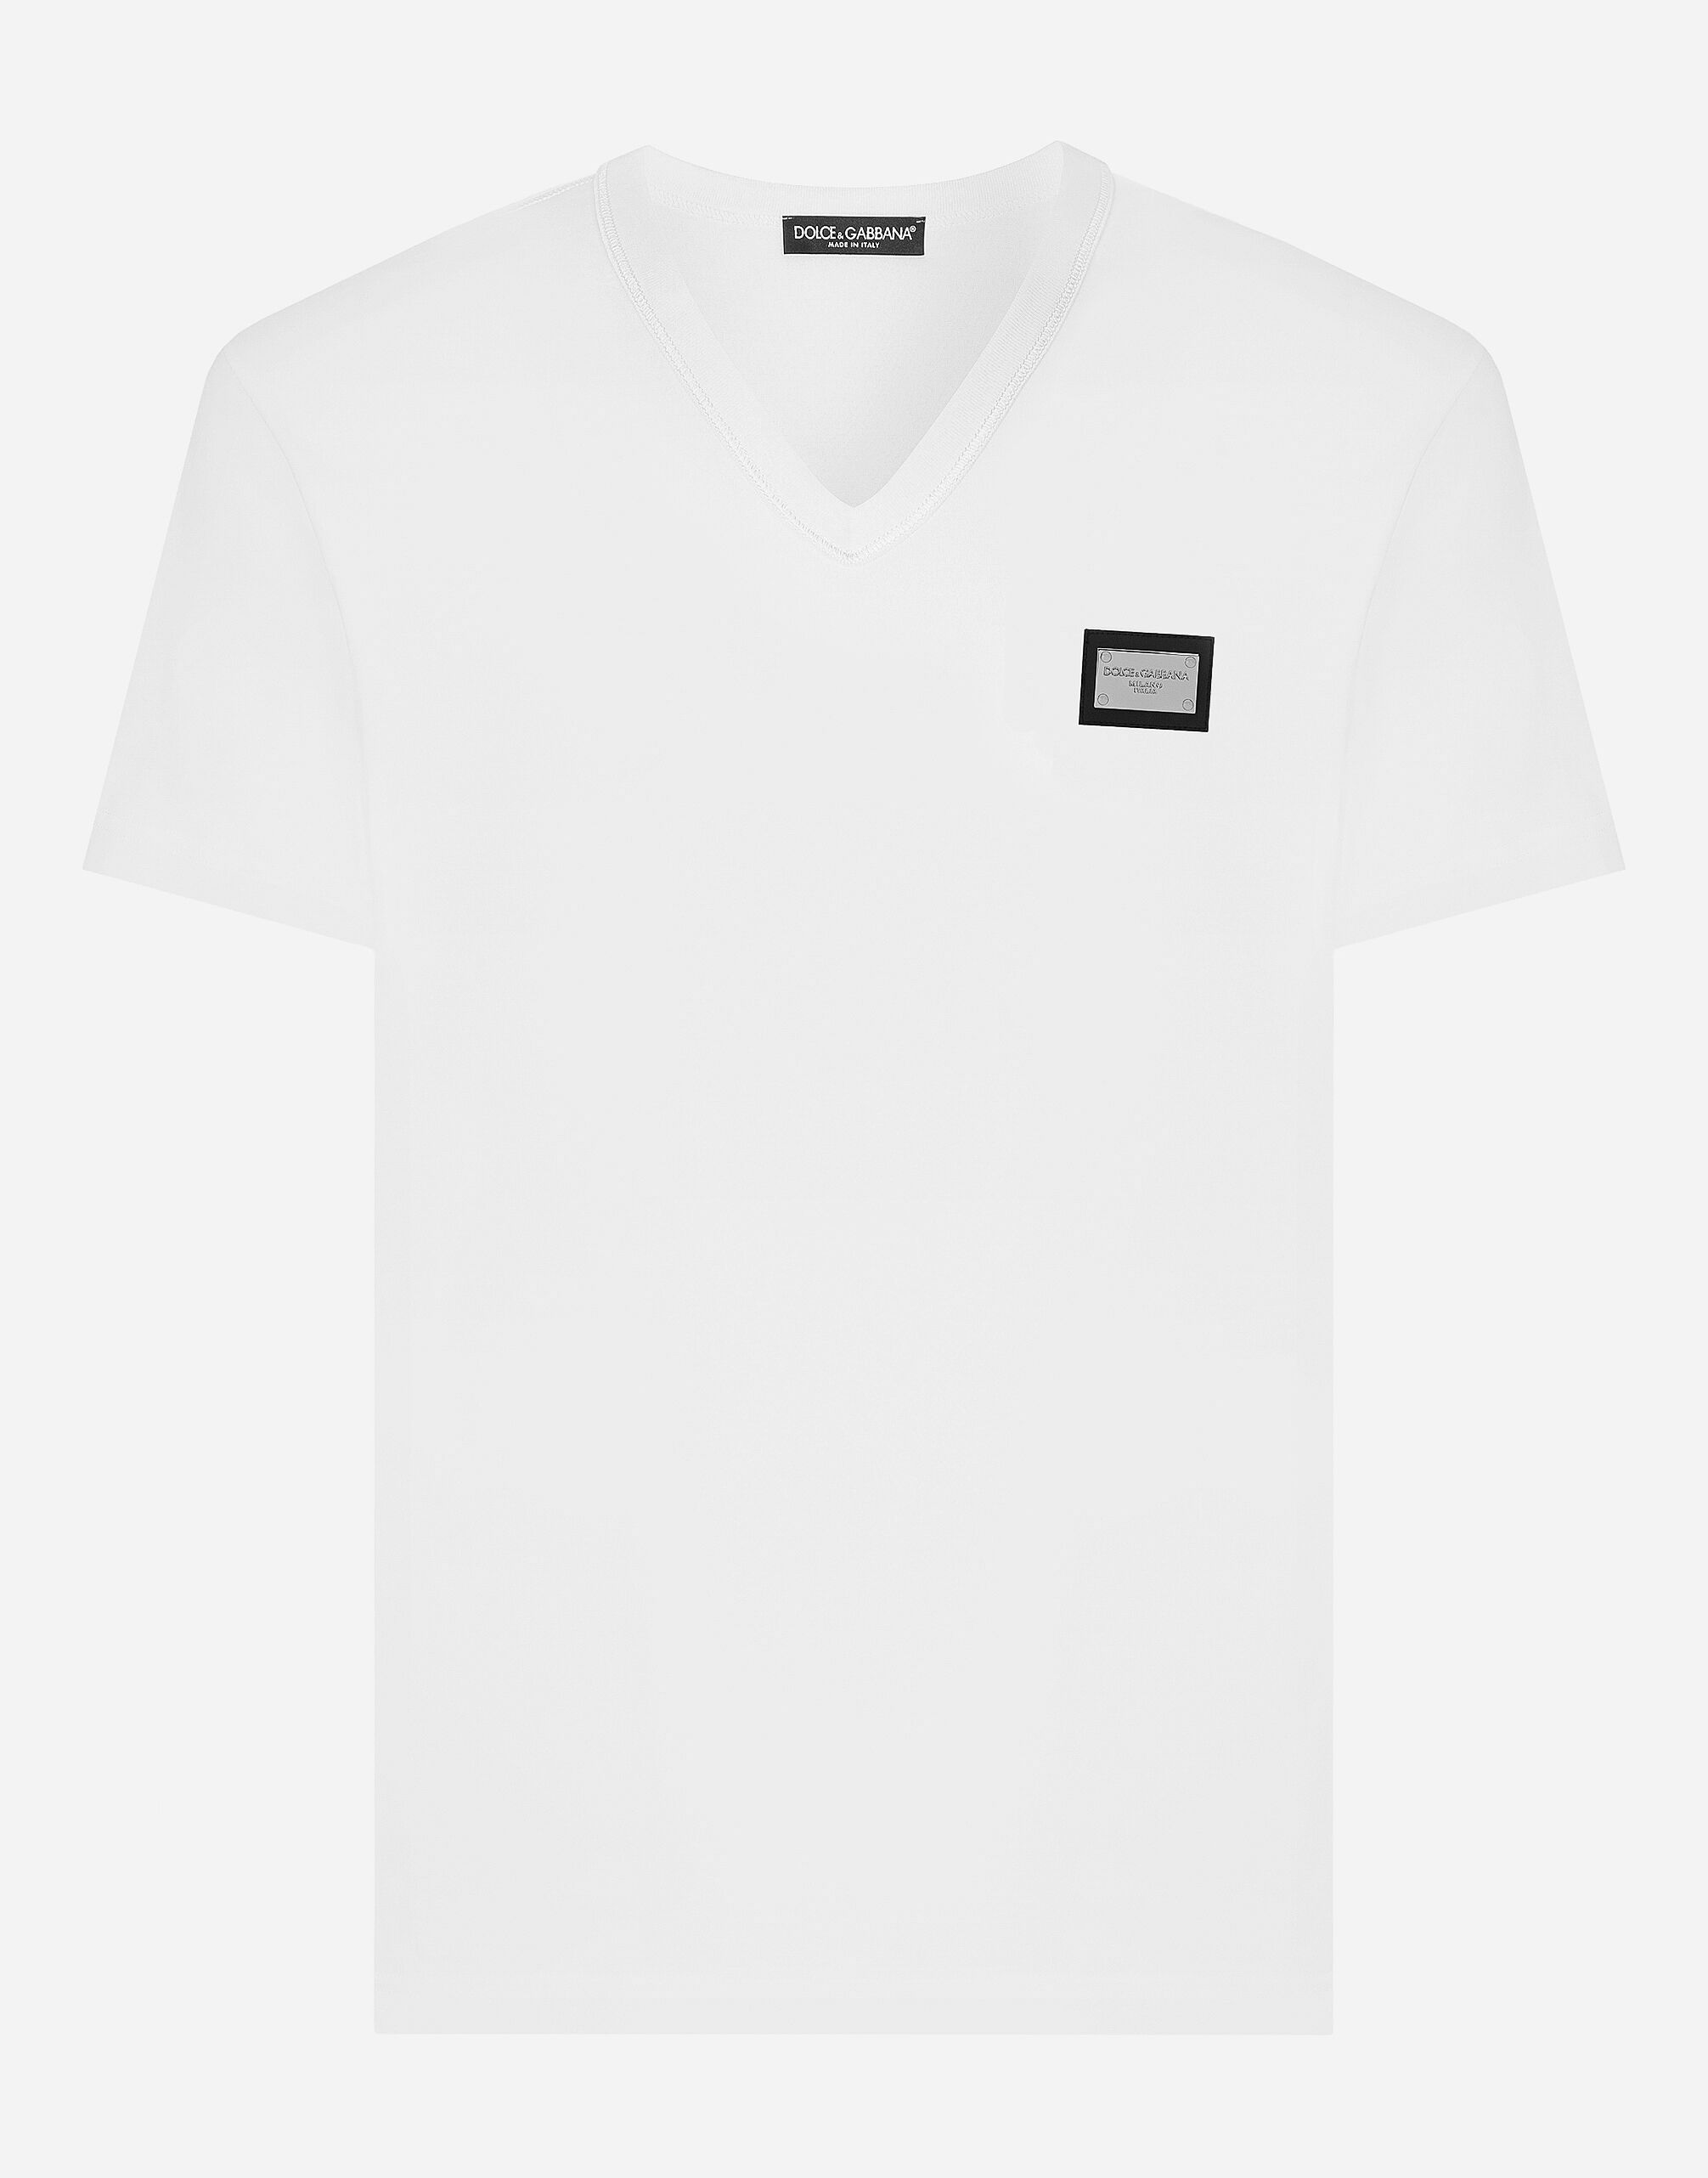 Dolce & Gabbana T-shirt scollo a V cotone con placca logata Nero G5JG4TFU5U8